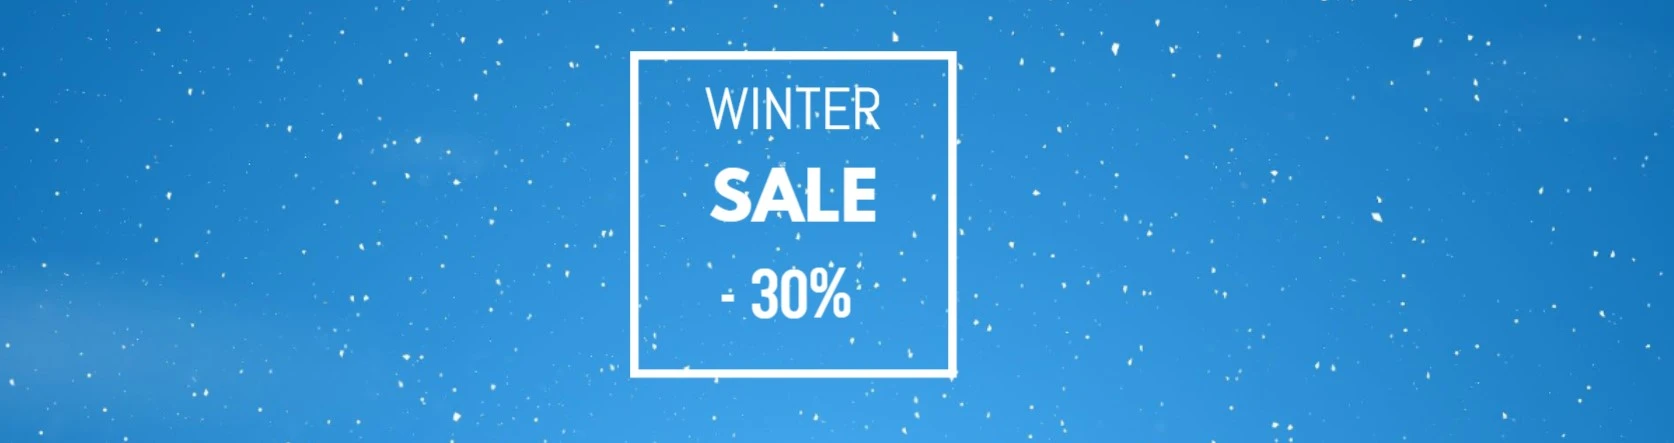 Winter SALE -30%